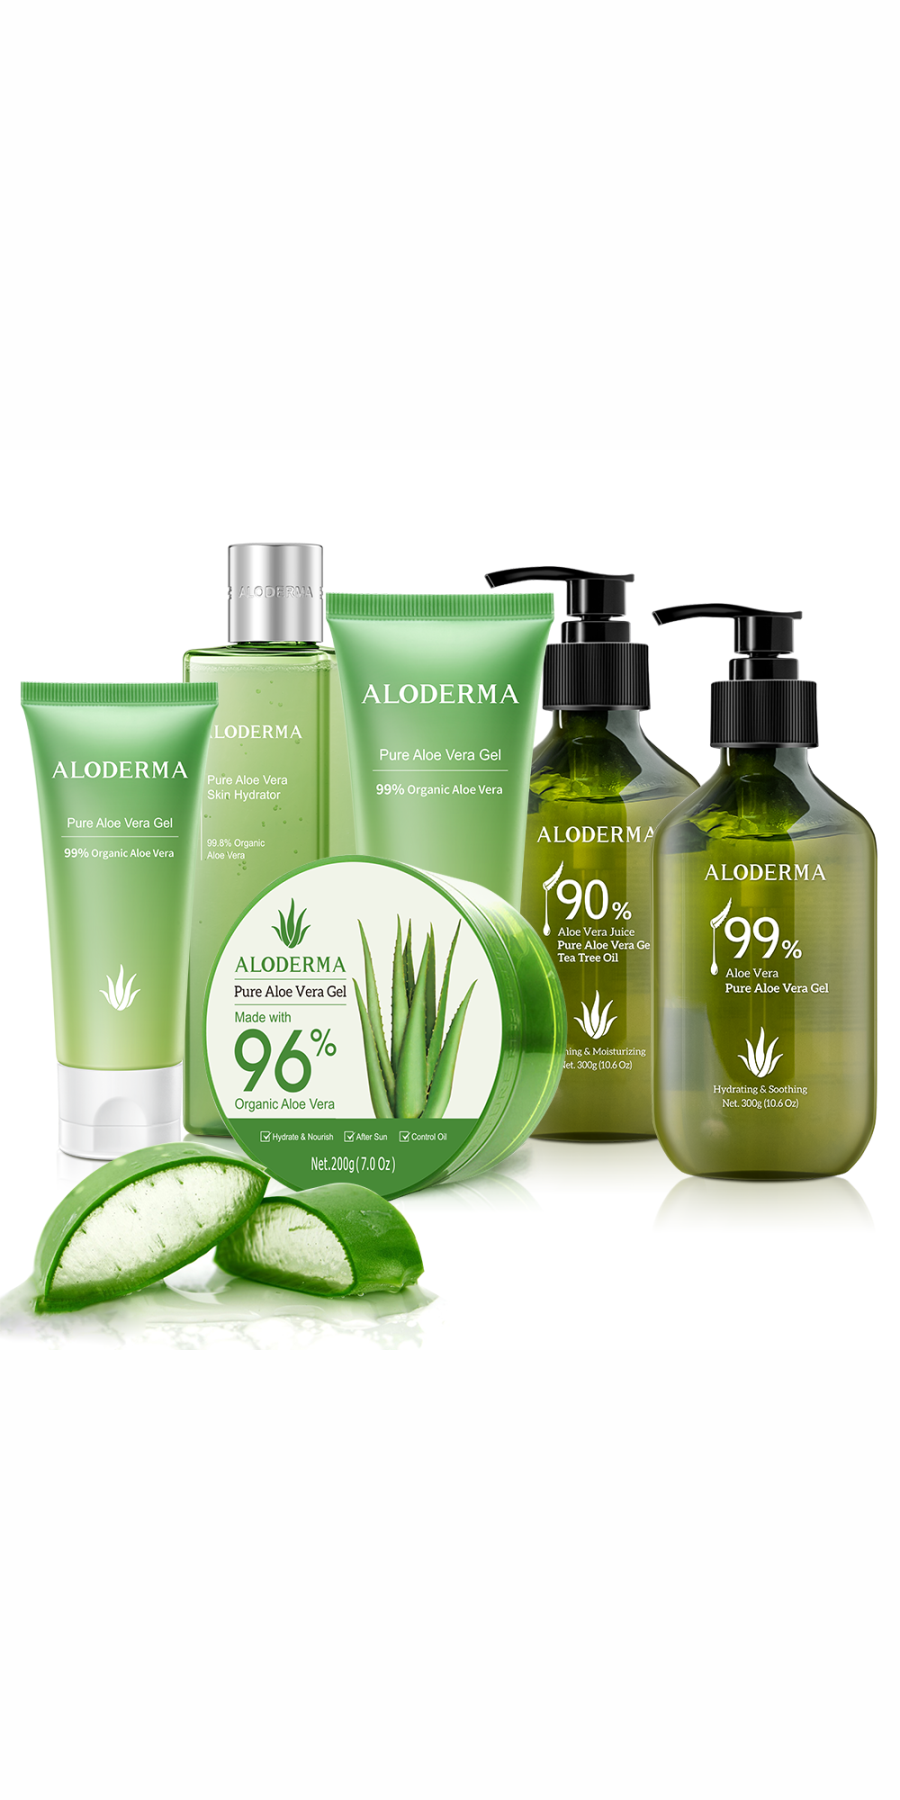 Pure Aloe Vera Skin Hydrator - 99.8% Organic Aloe by Aloderma 1